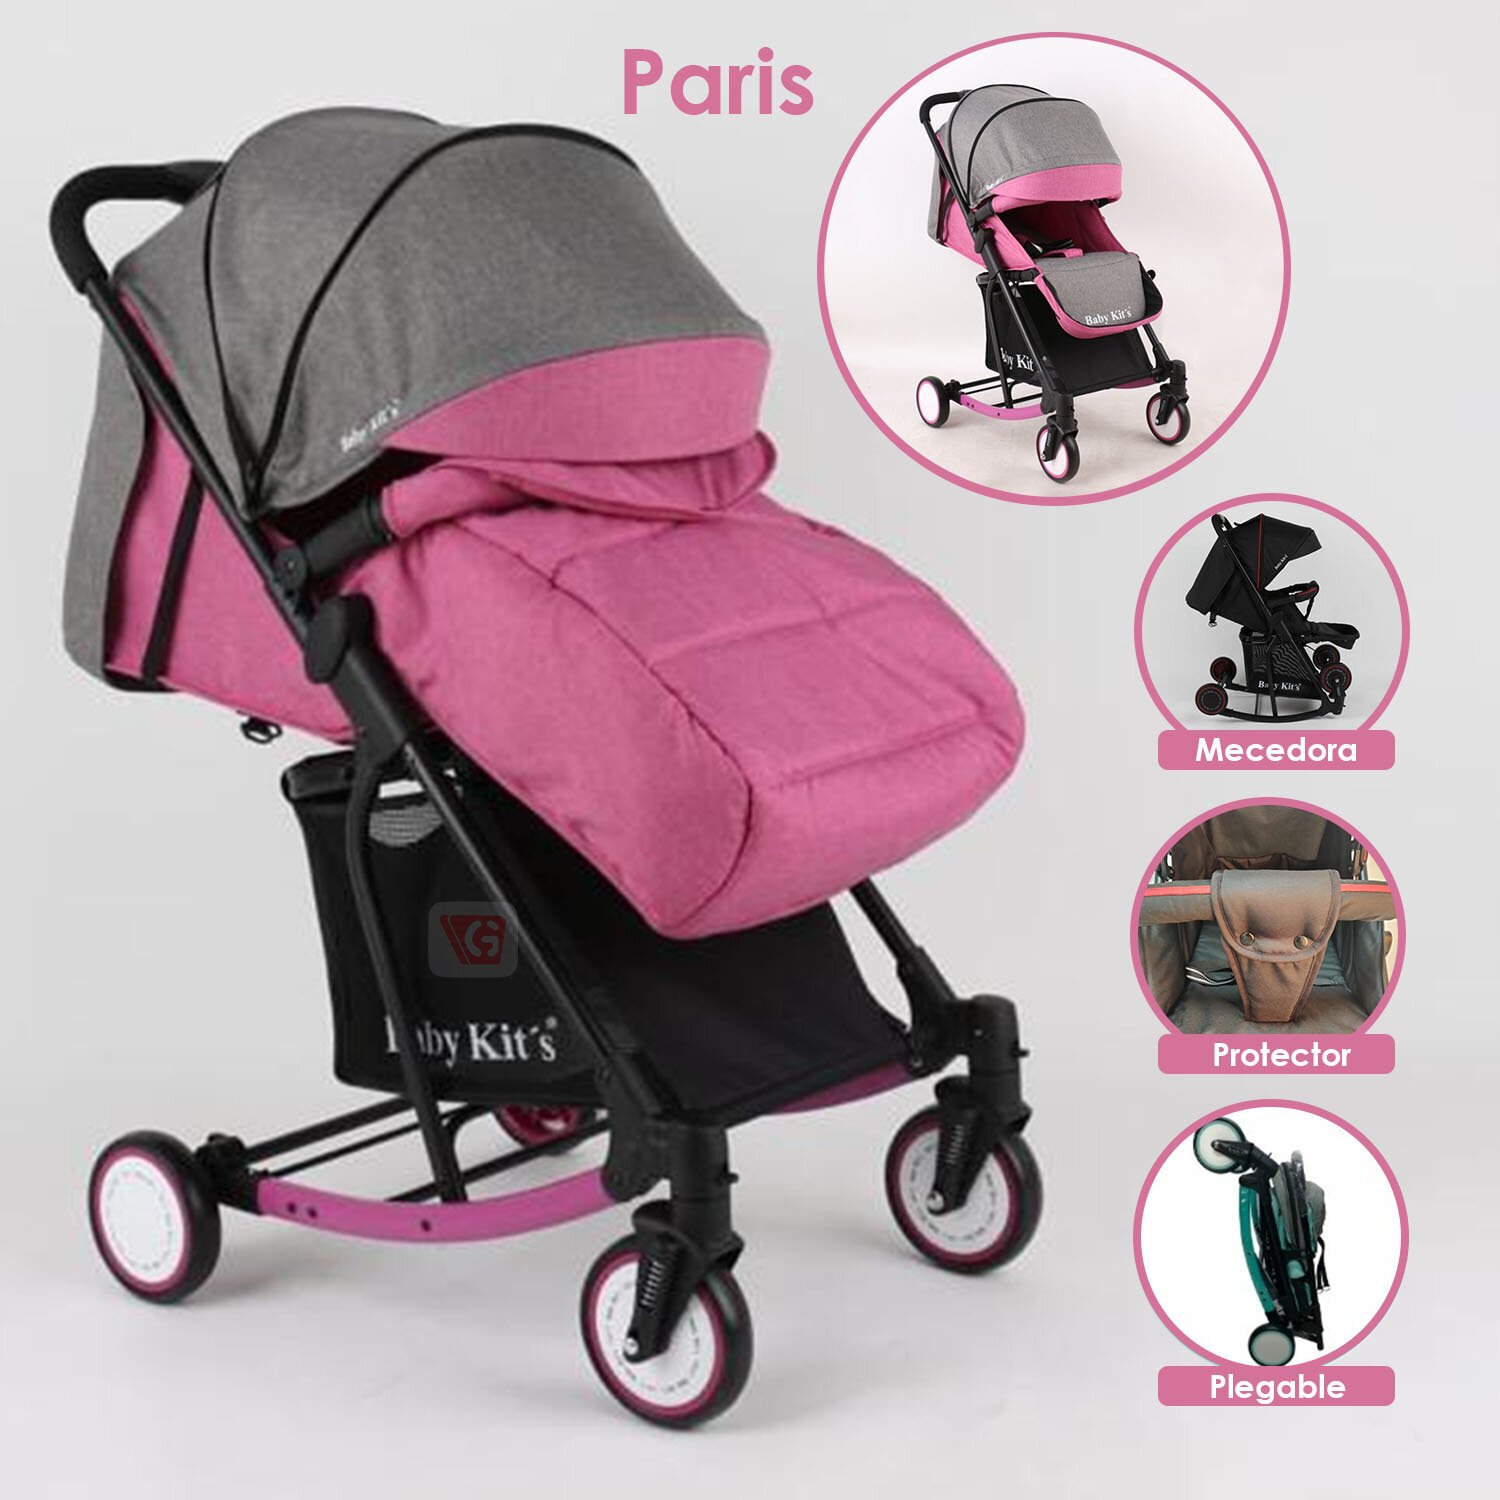 Coche Cuna Mecedora Baby Kits PARIS